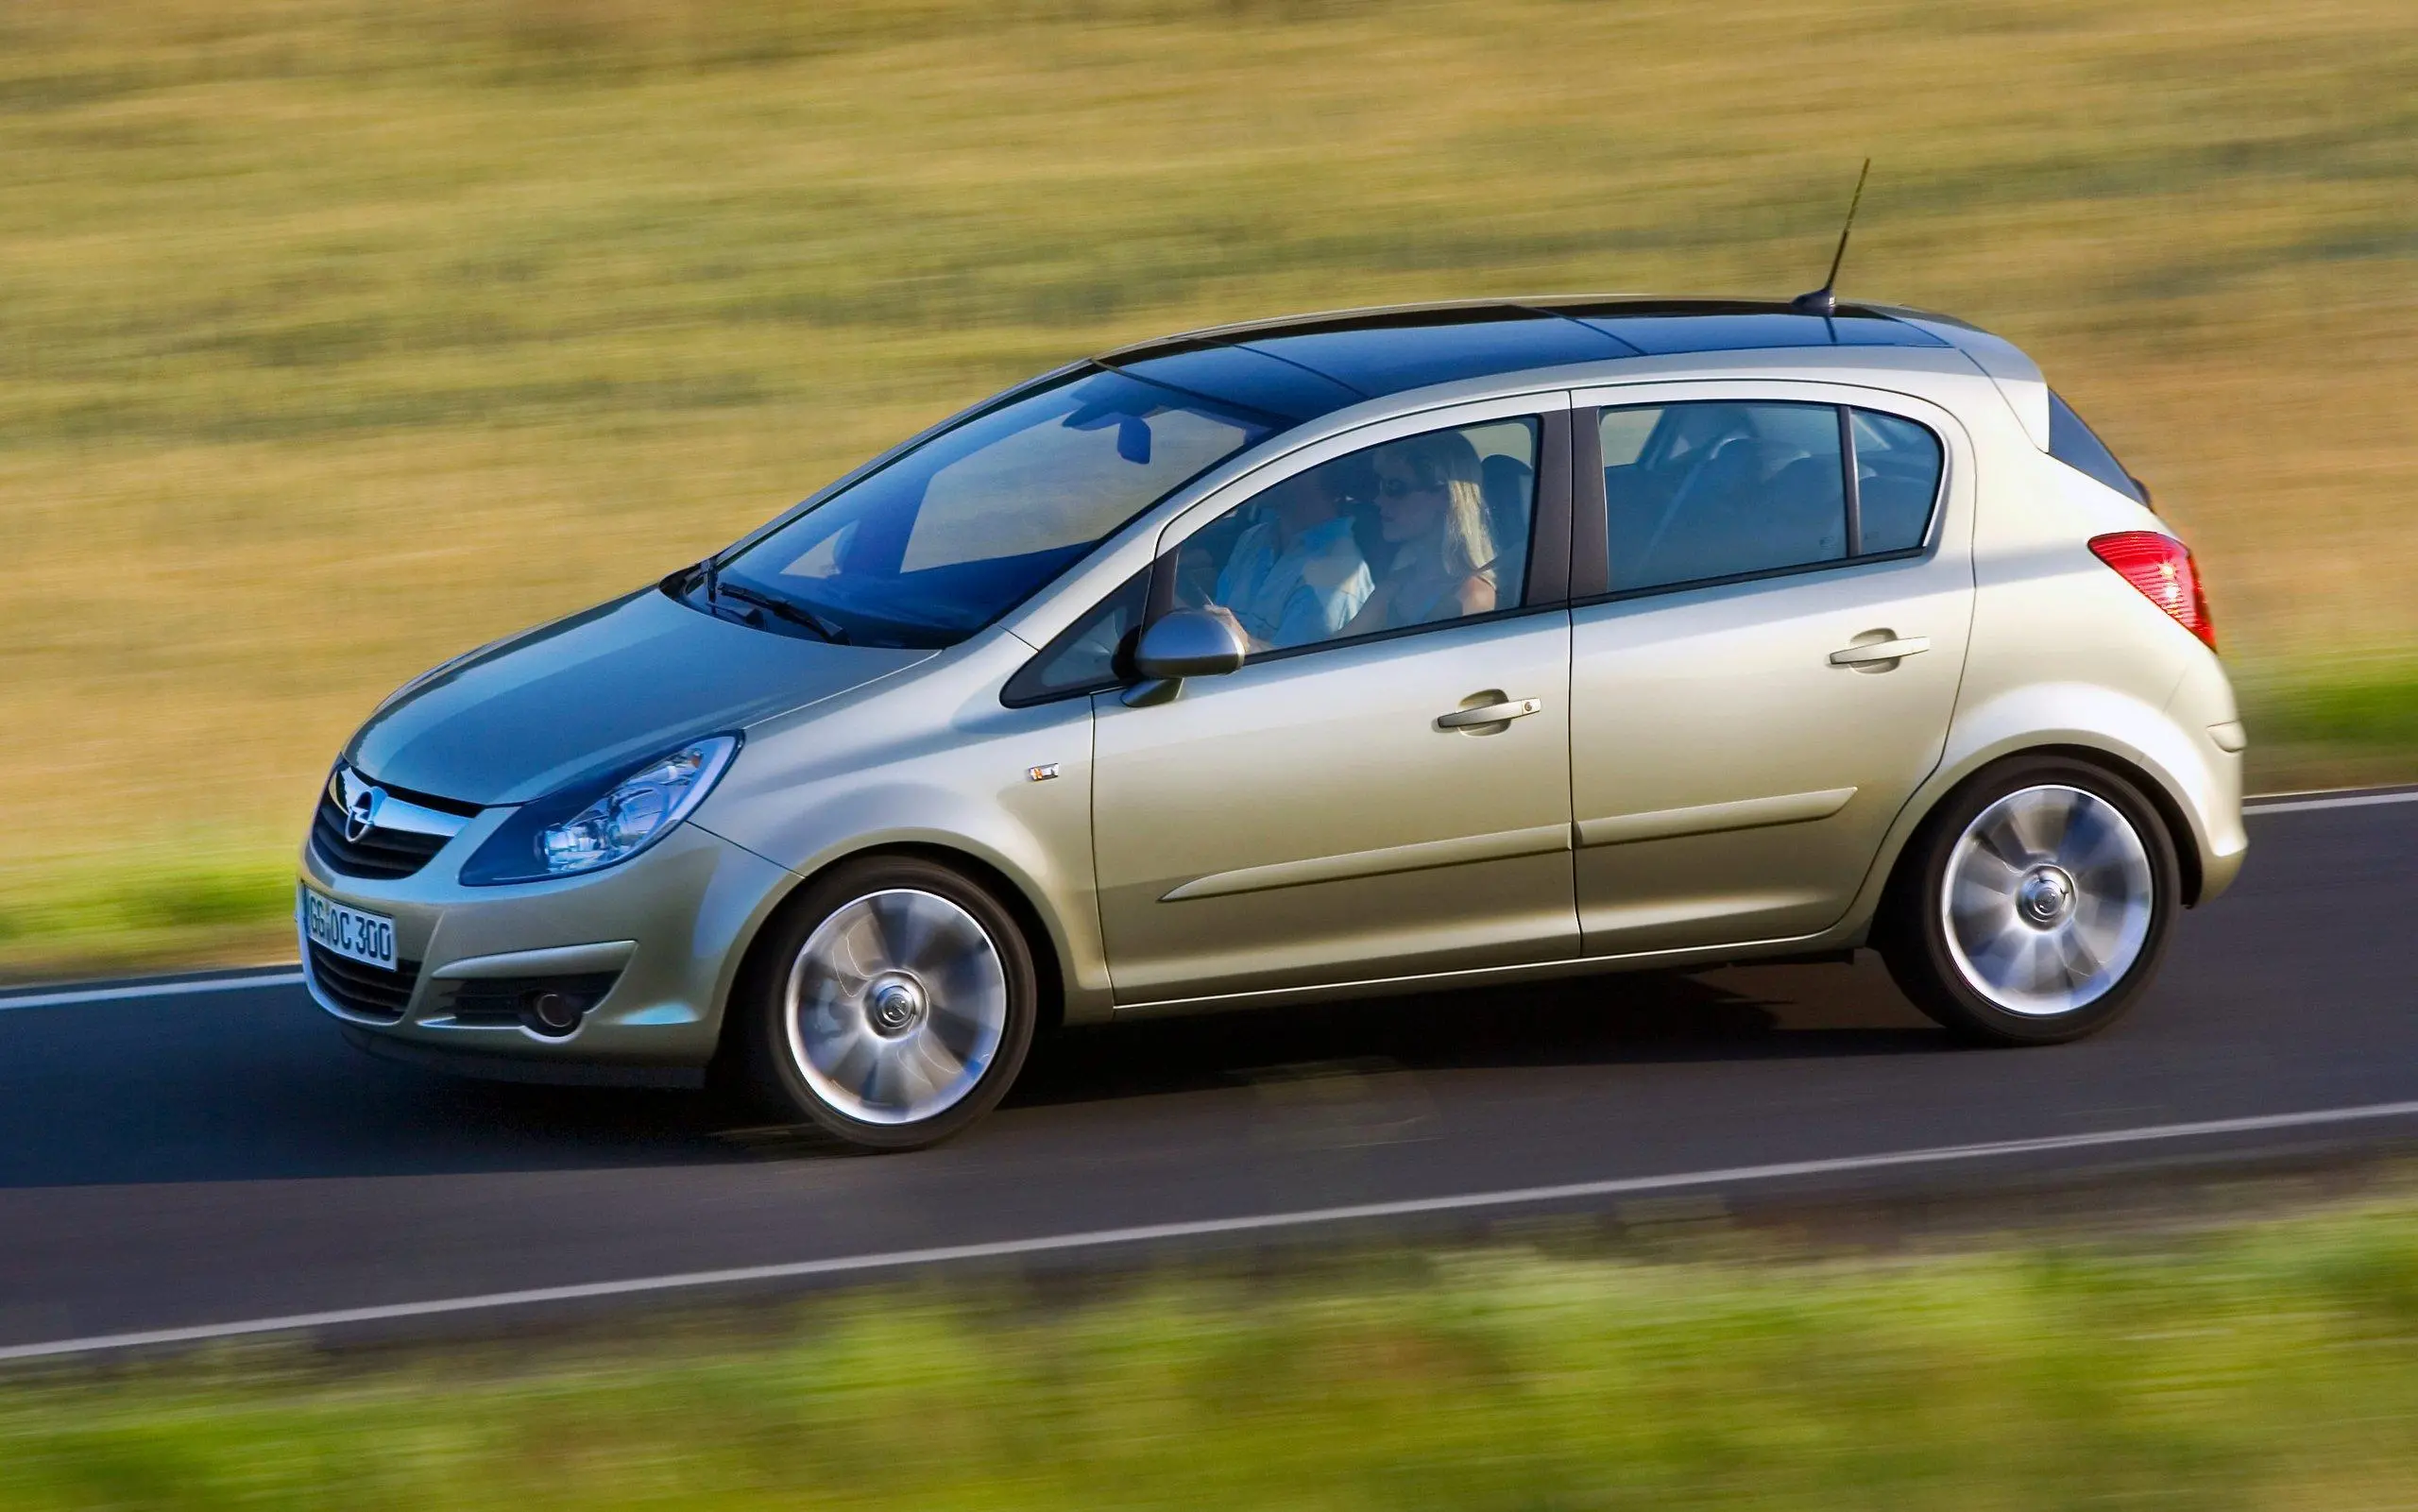 2013 Opel Corsa D 1.2 (75 cui) gasoline 63 kW 115 Nm